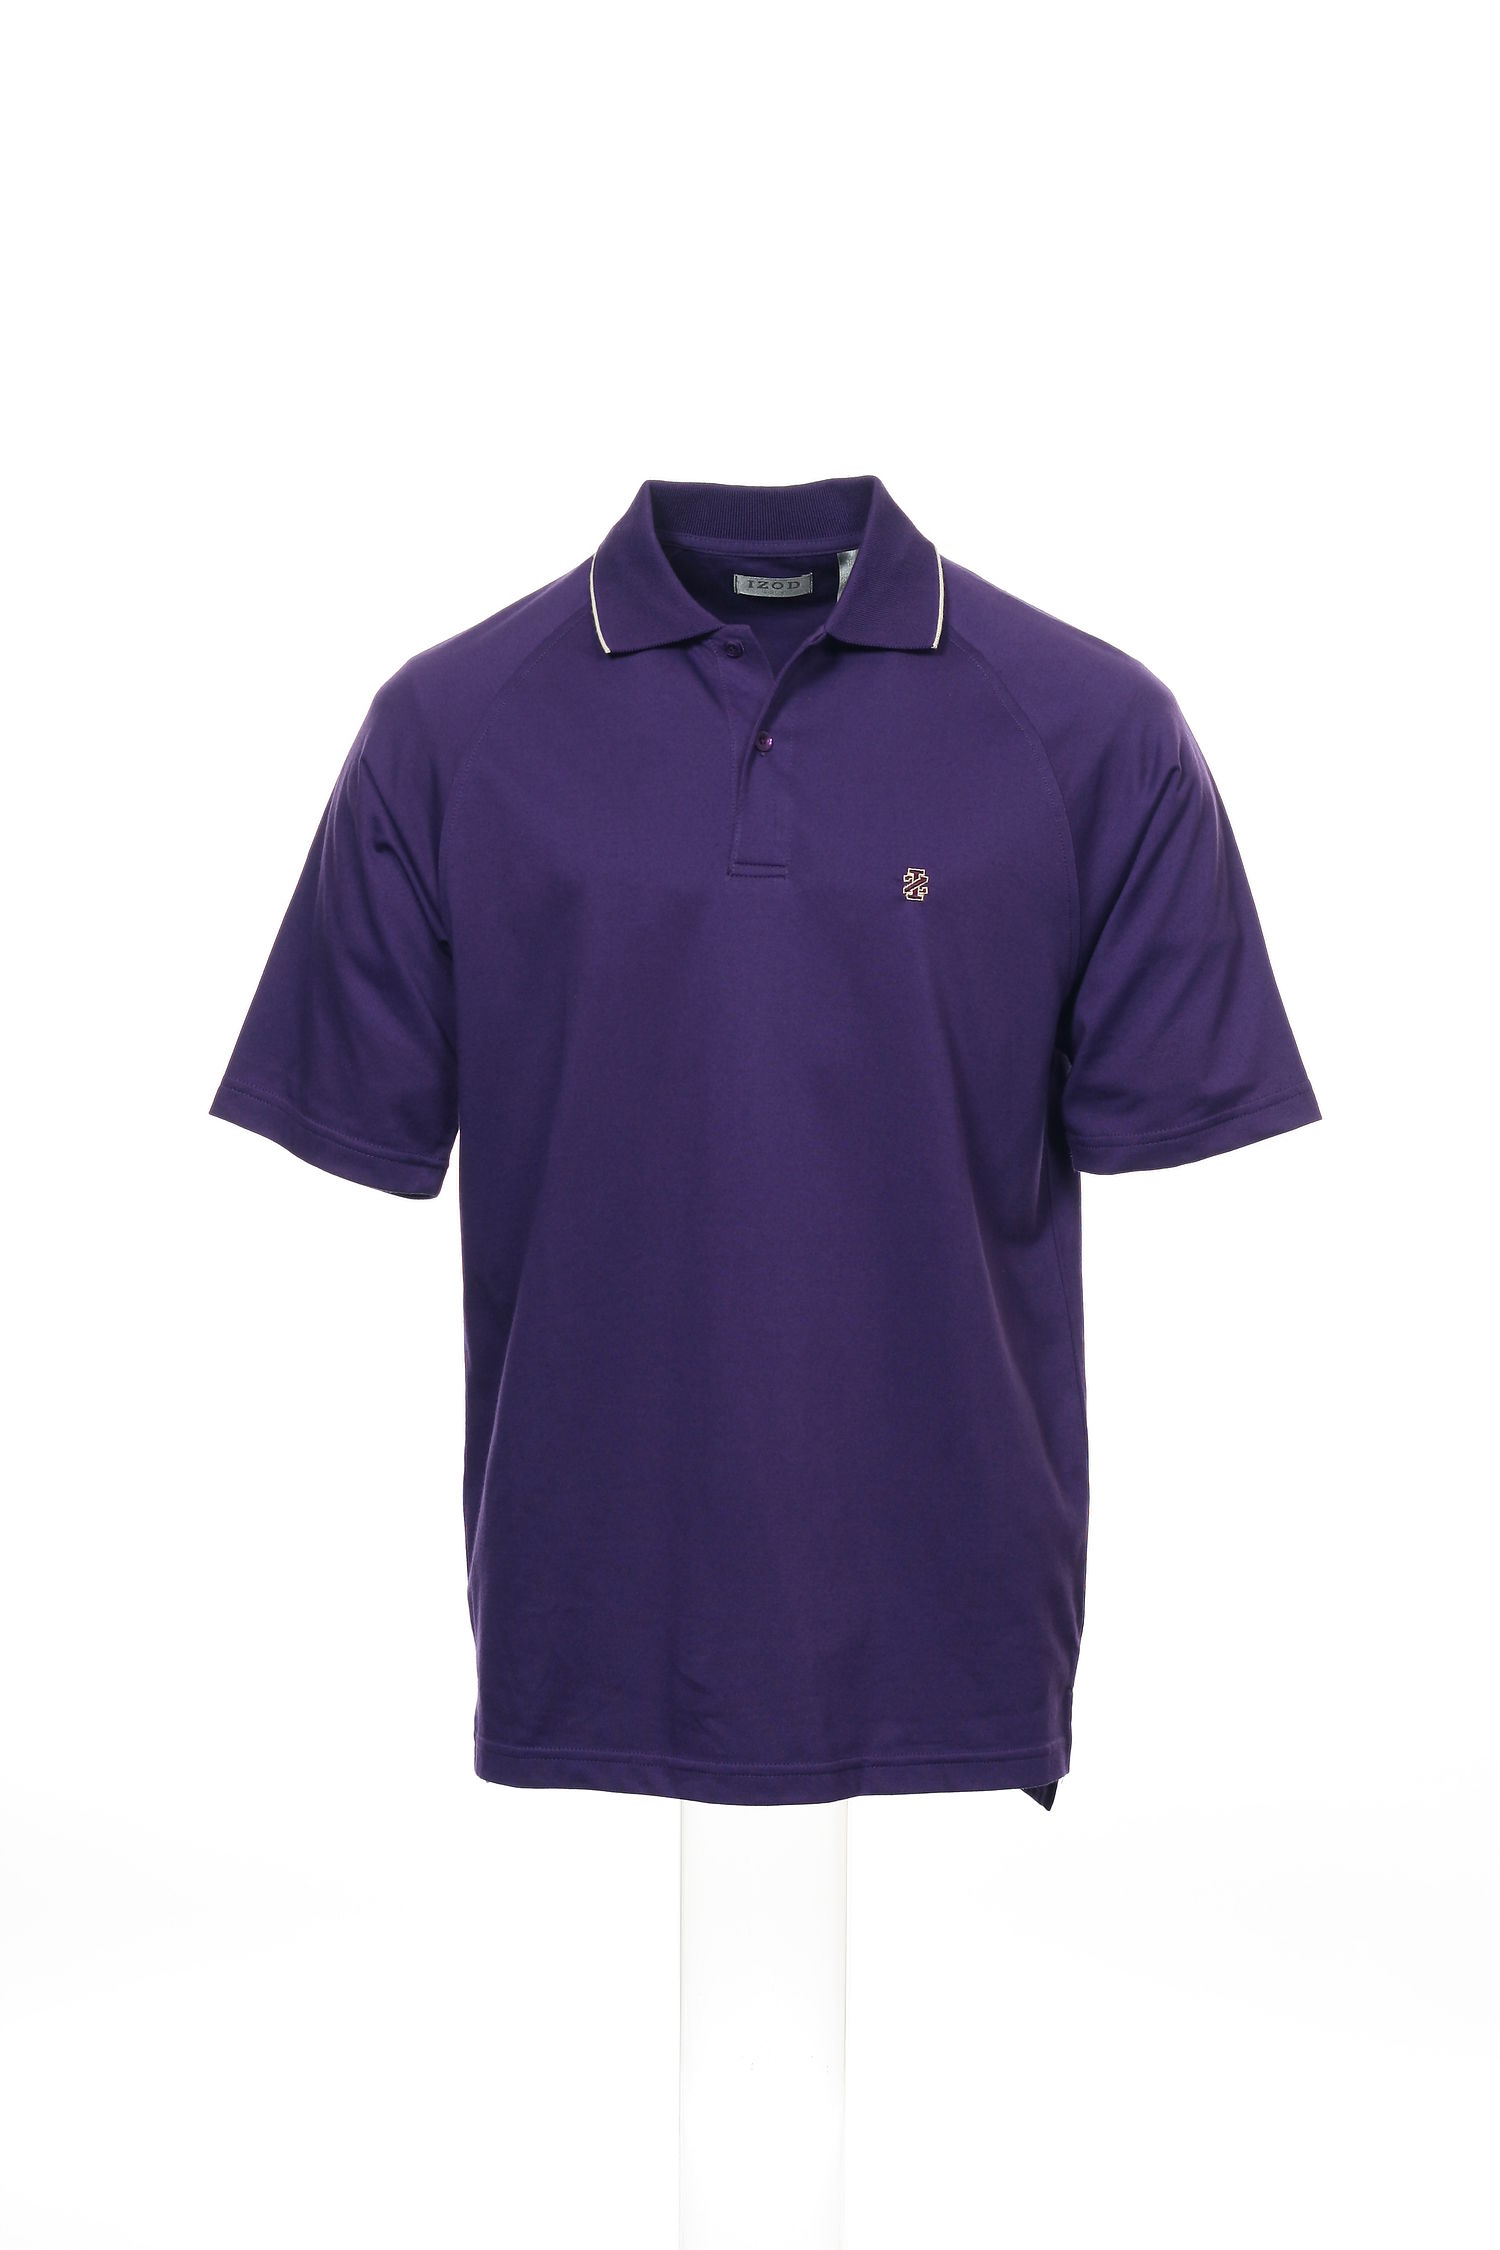 Izod Golf Purple Polo Shirt